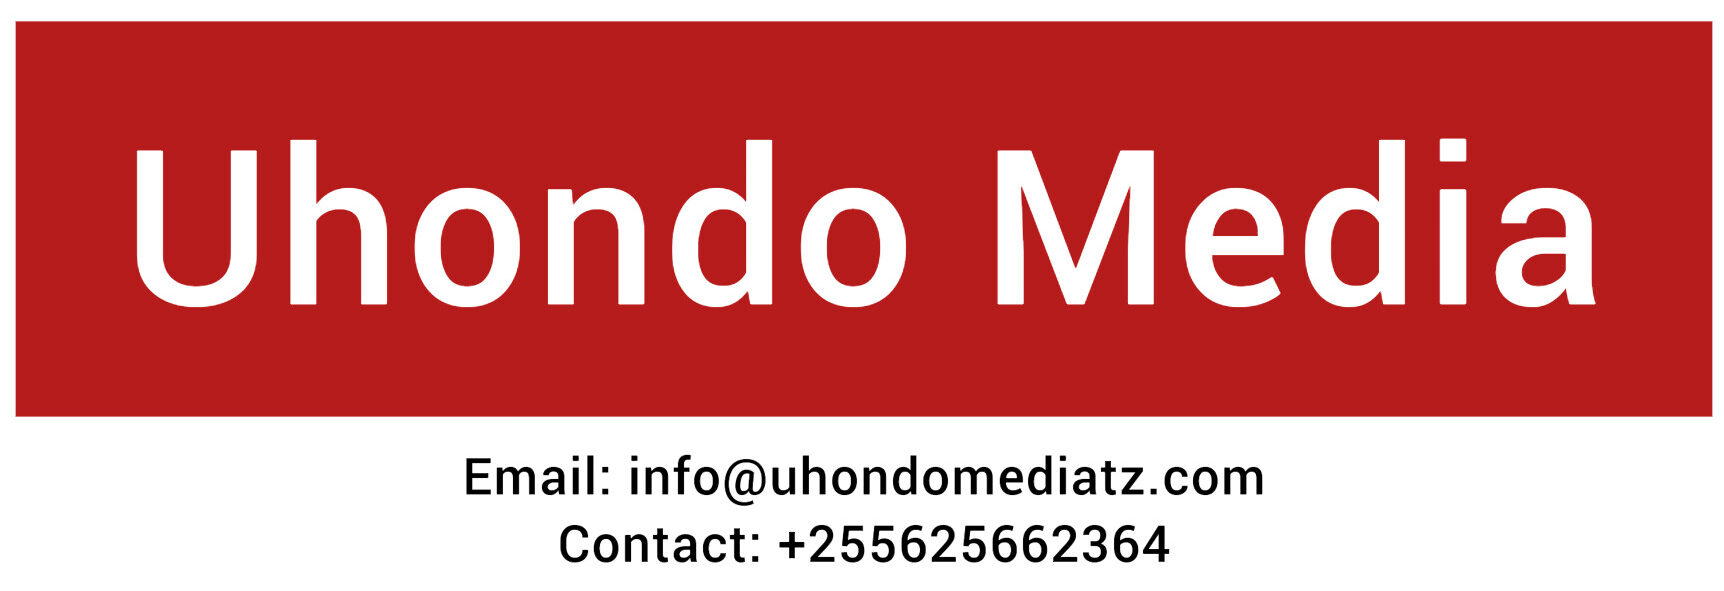 Uhondo Media